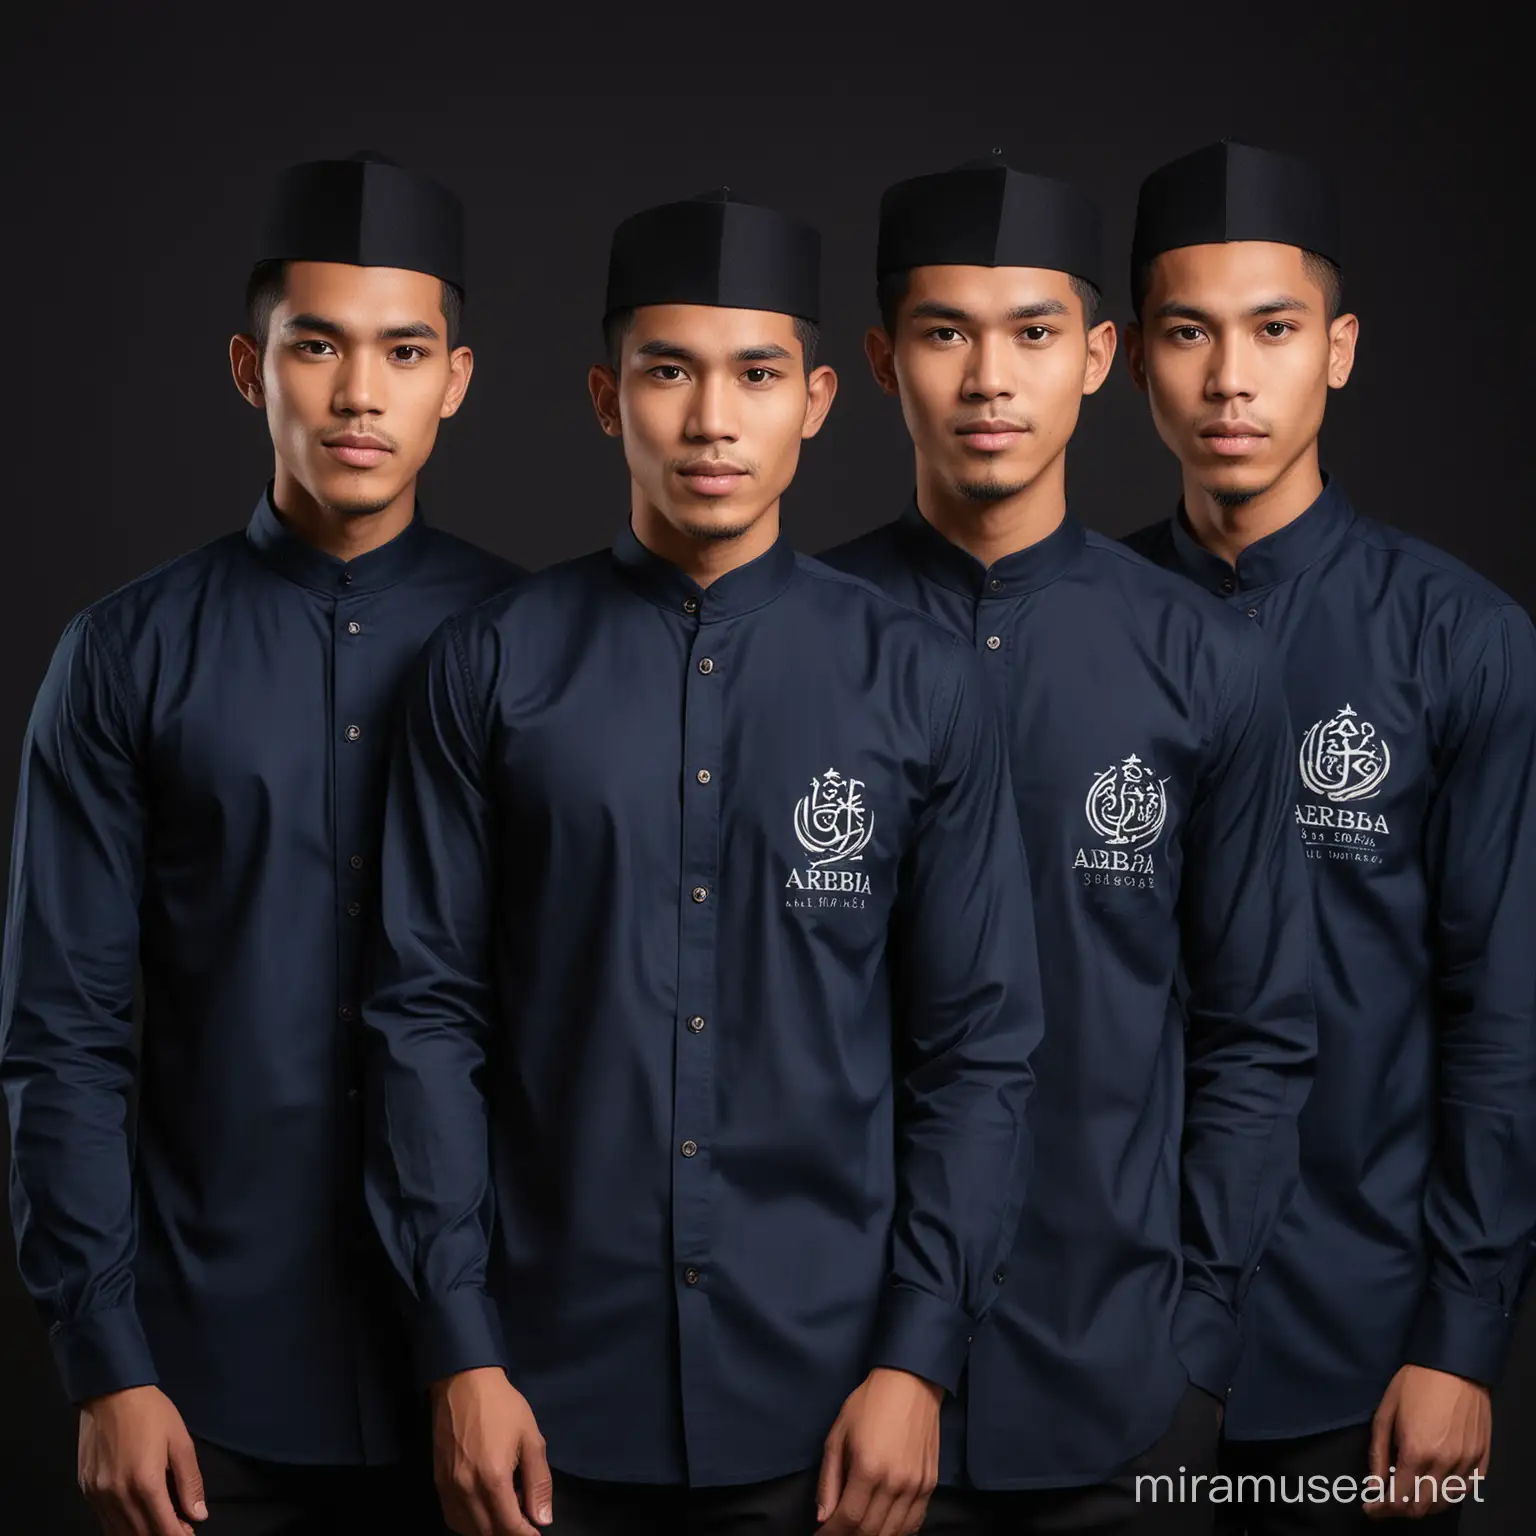 Stylish Indonesian Men in Navy Blue Koko Shirts by ARREBA